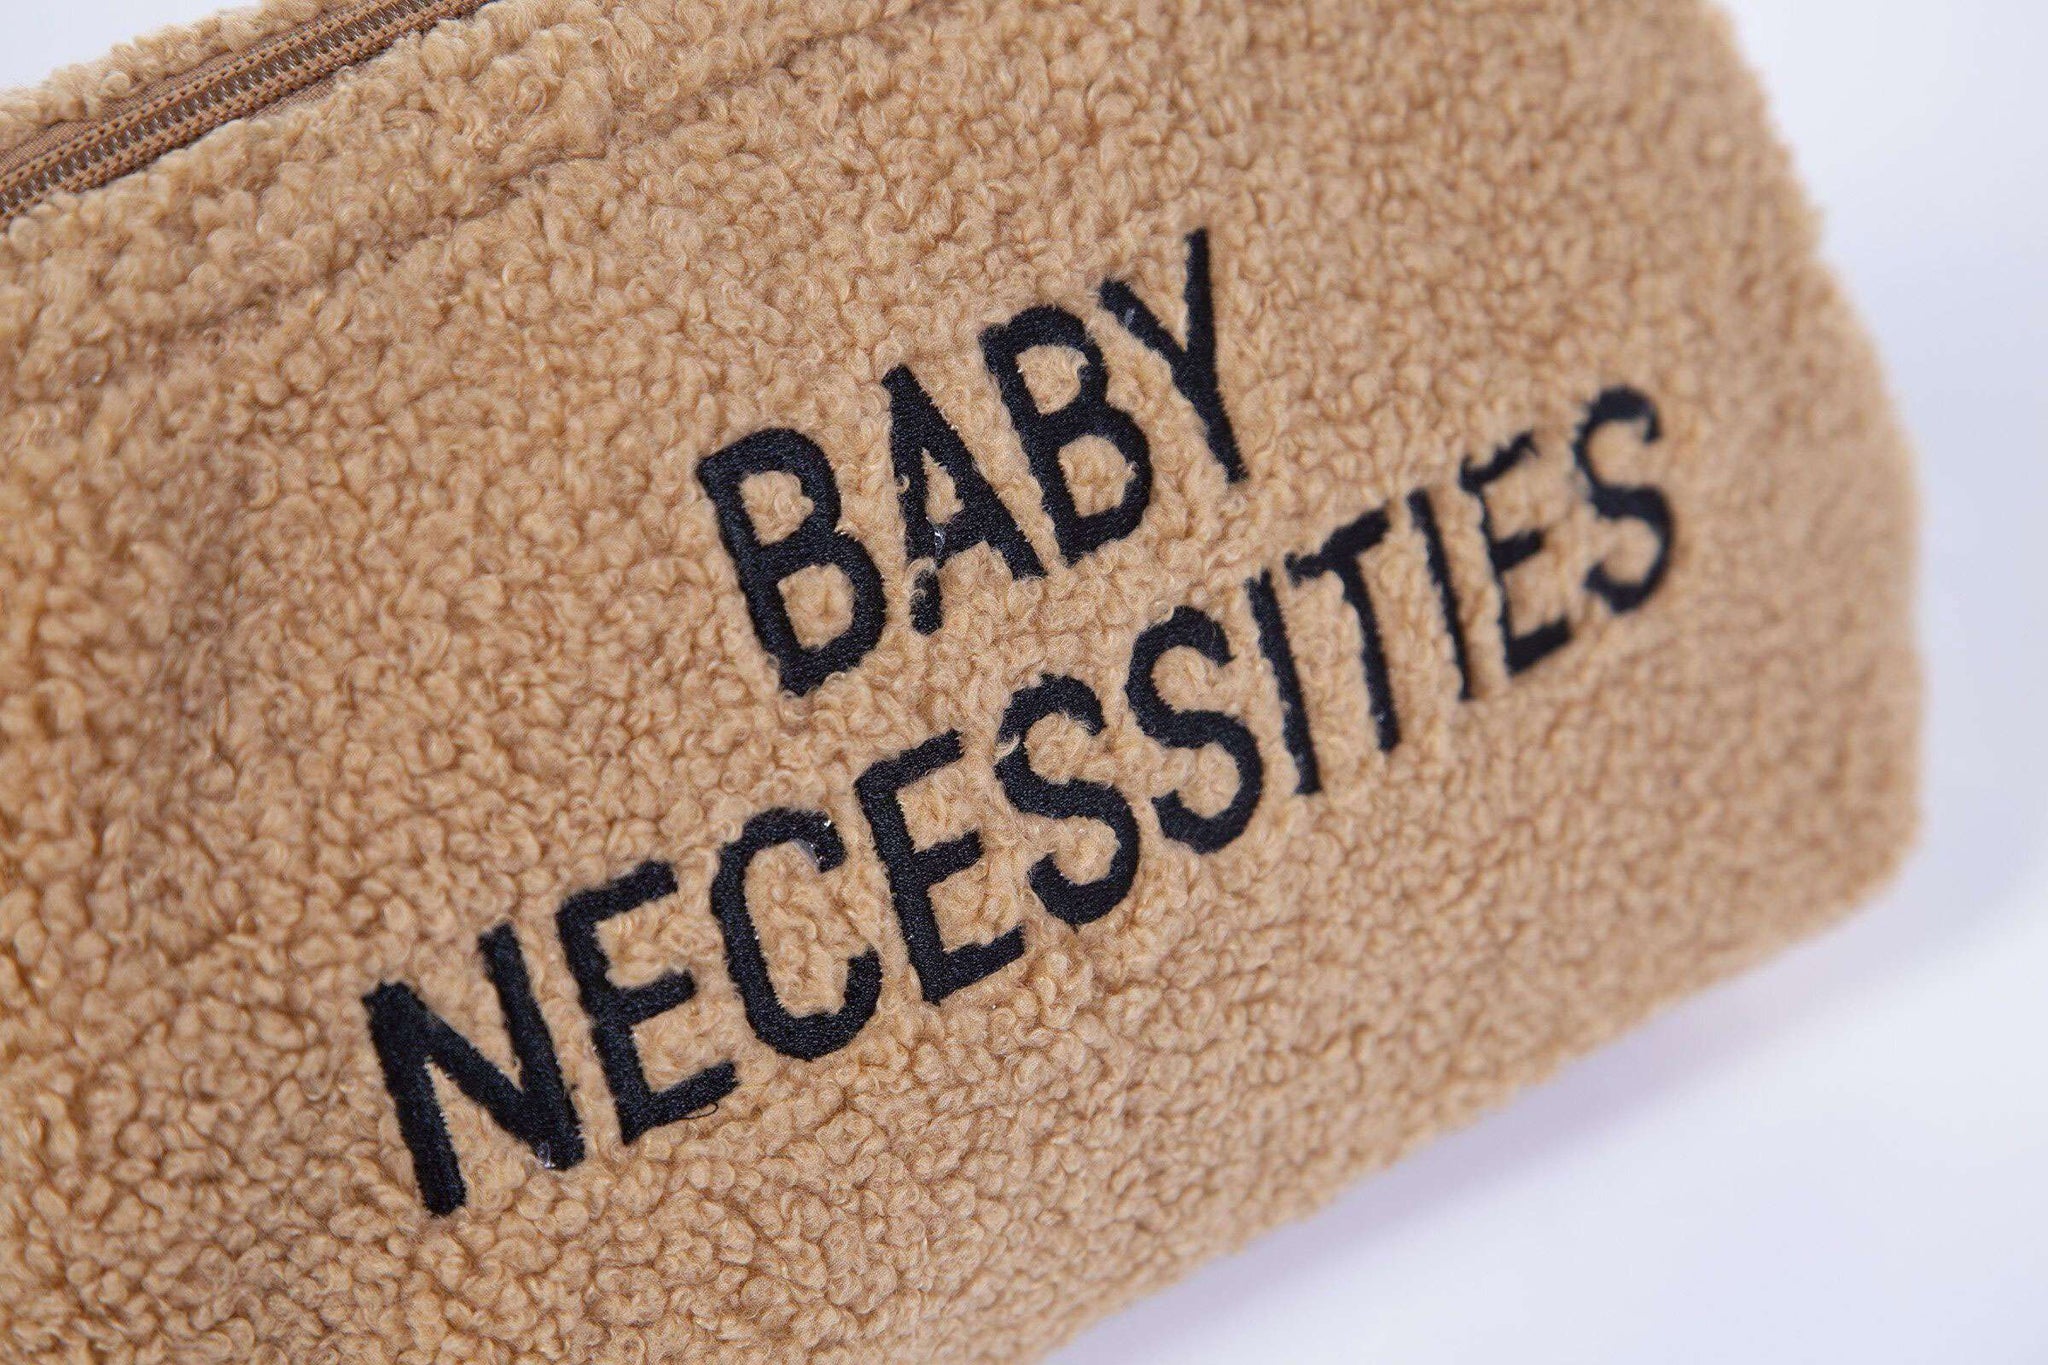 Baby Necessities Bag Teddy Beige - ChildHome